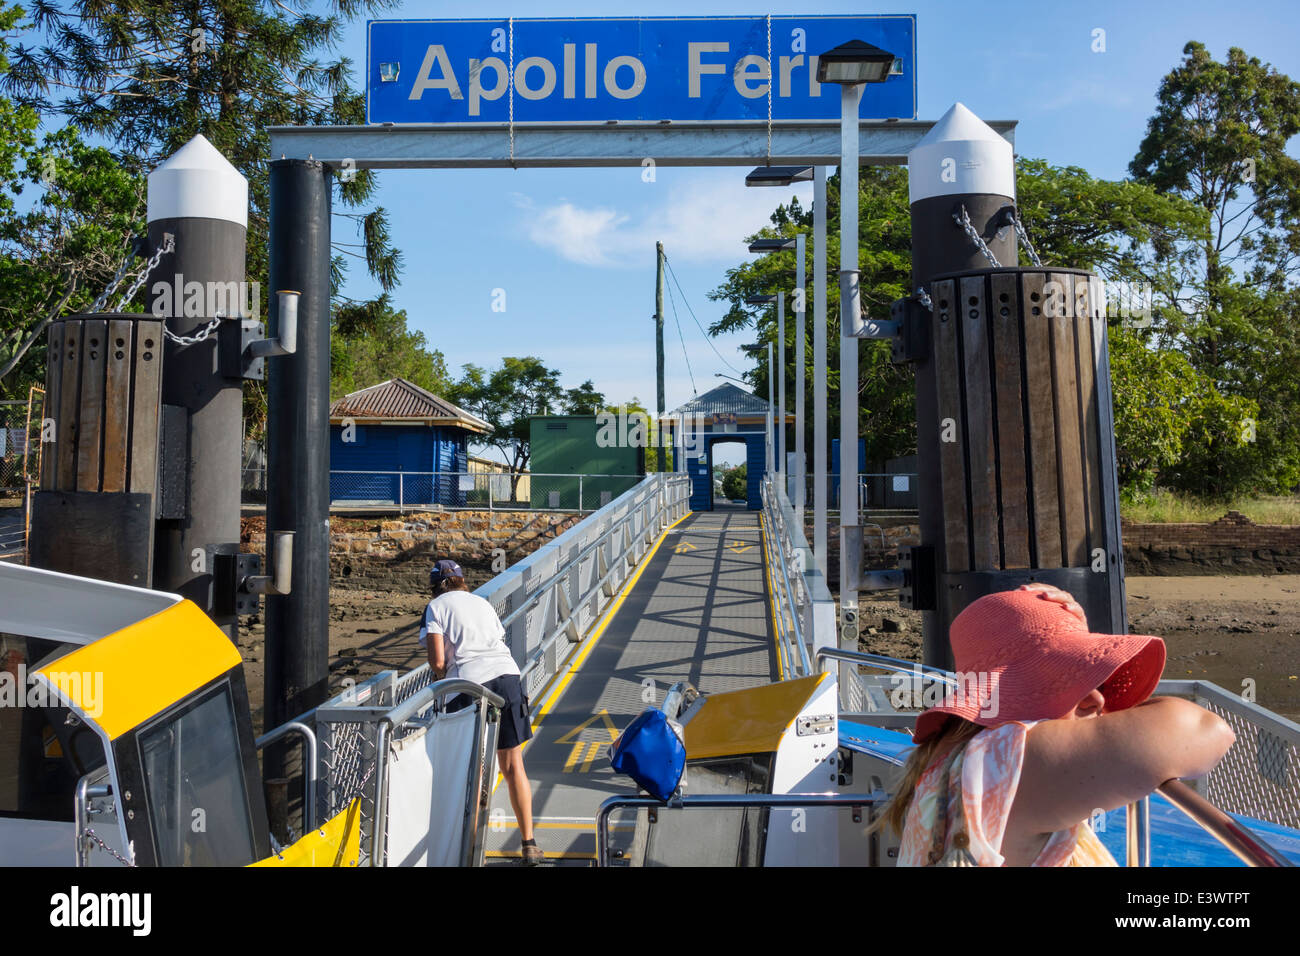 Brisbane Australia,Bulimba,Brisbane River,Apollo Ferry Terminal,ferry,boat,CityCat,TransLink,Trans Link,QueenslandFerries,Ferries,passenger passengers Stock Photo